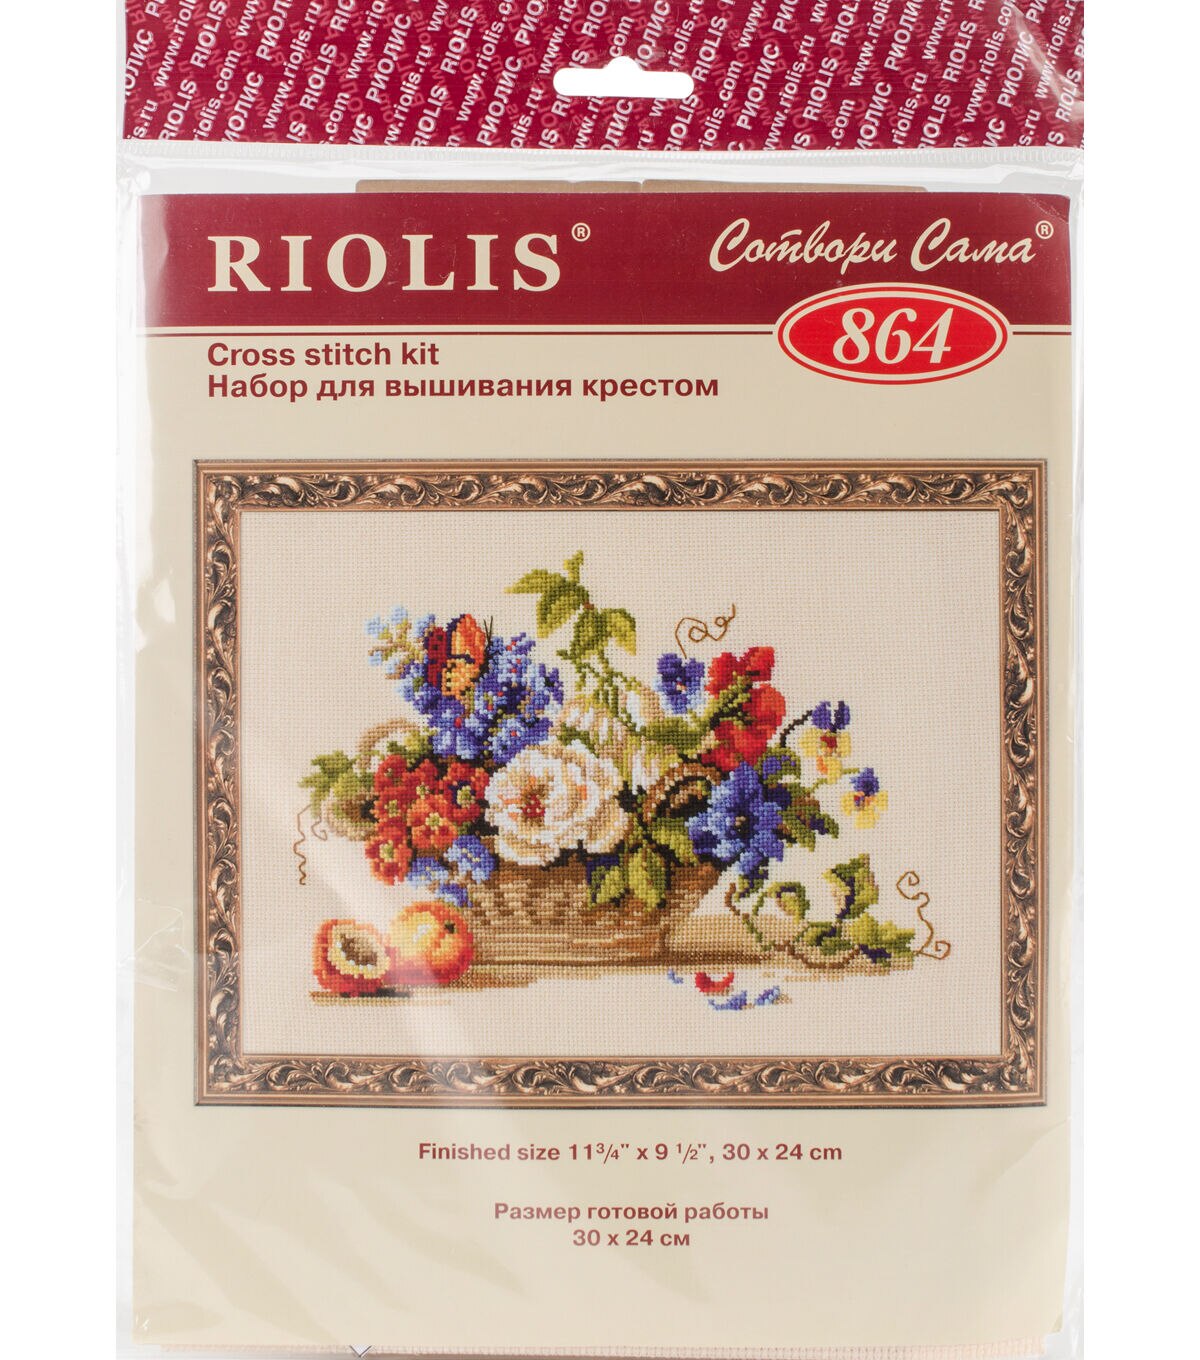 Riolis White Briar Cross Stitch Kit-8.25X11.75 14 Count 8.25 x 11.75